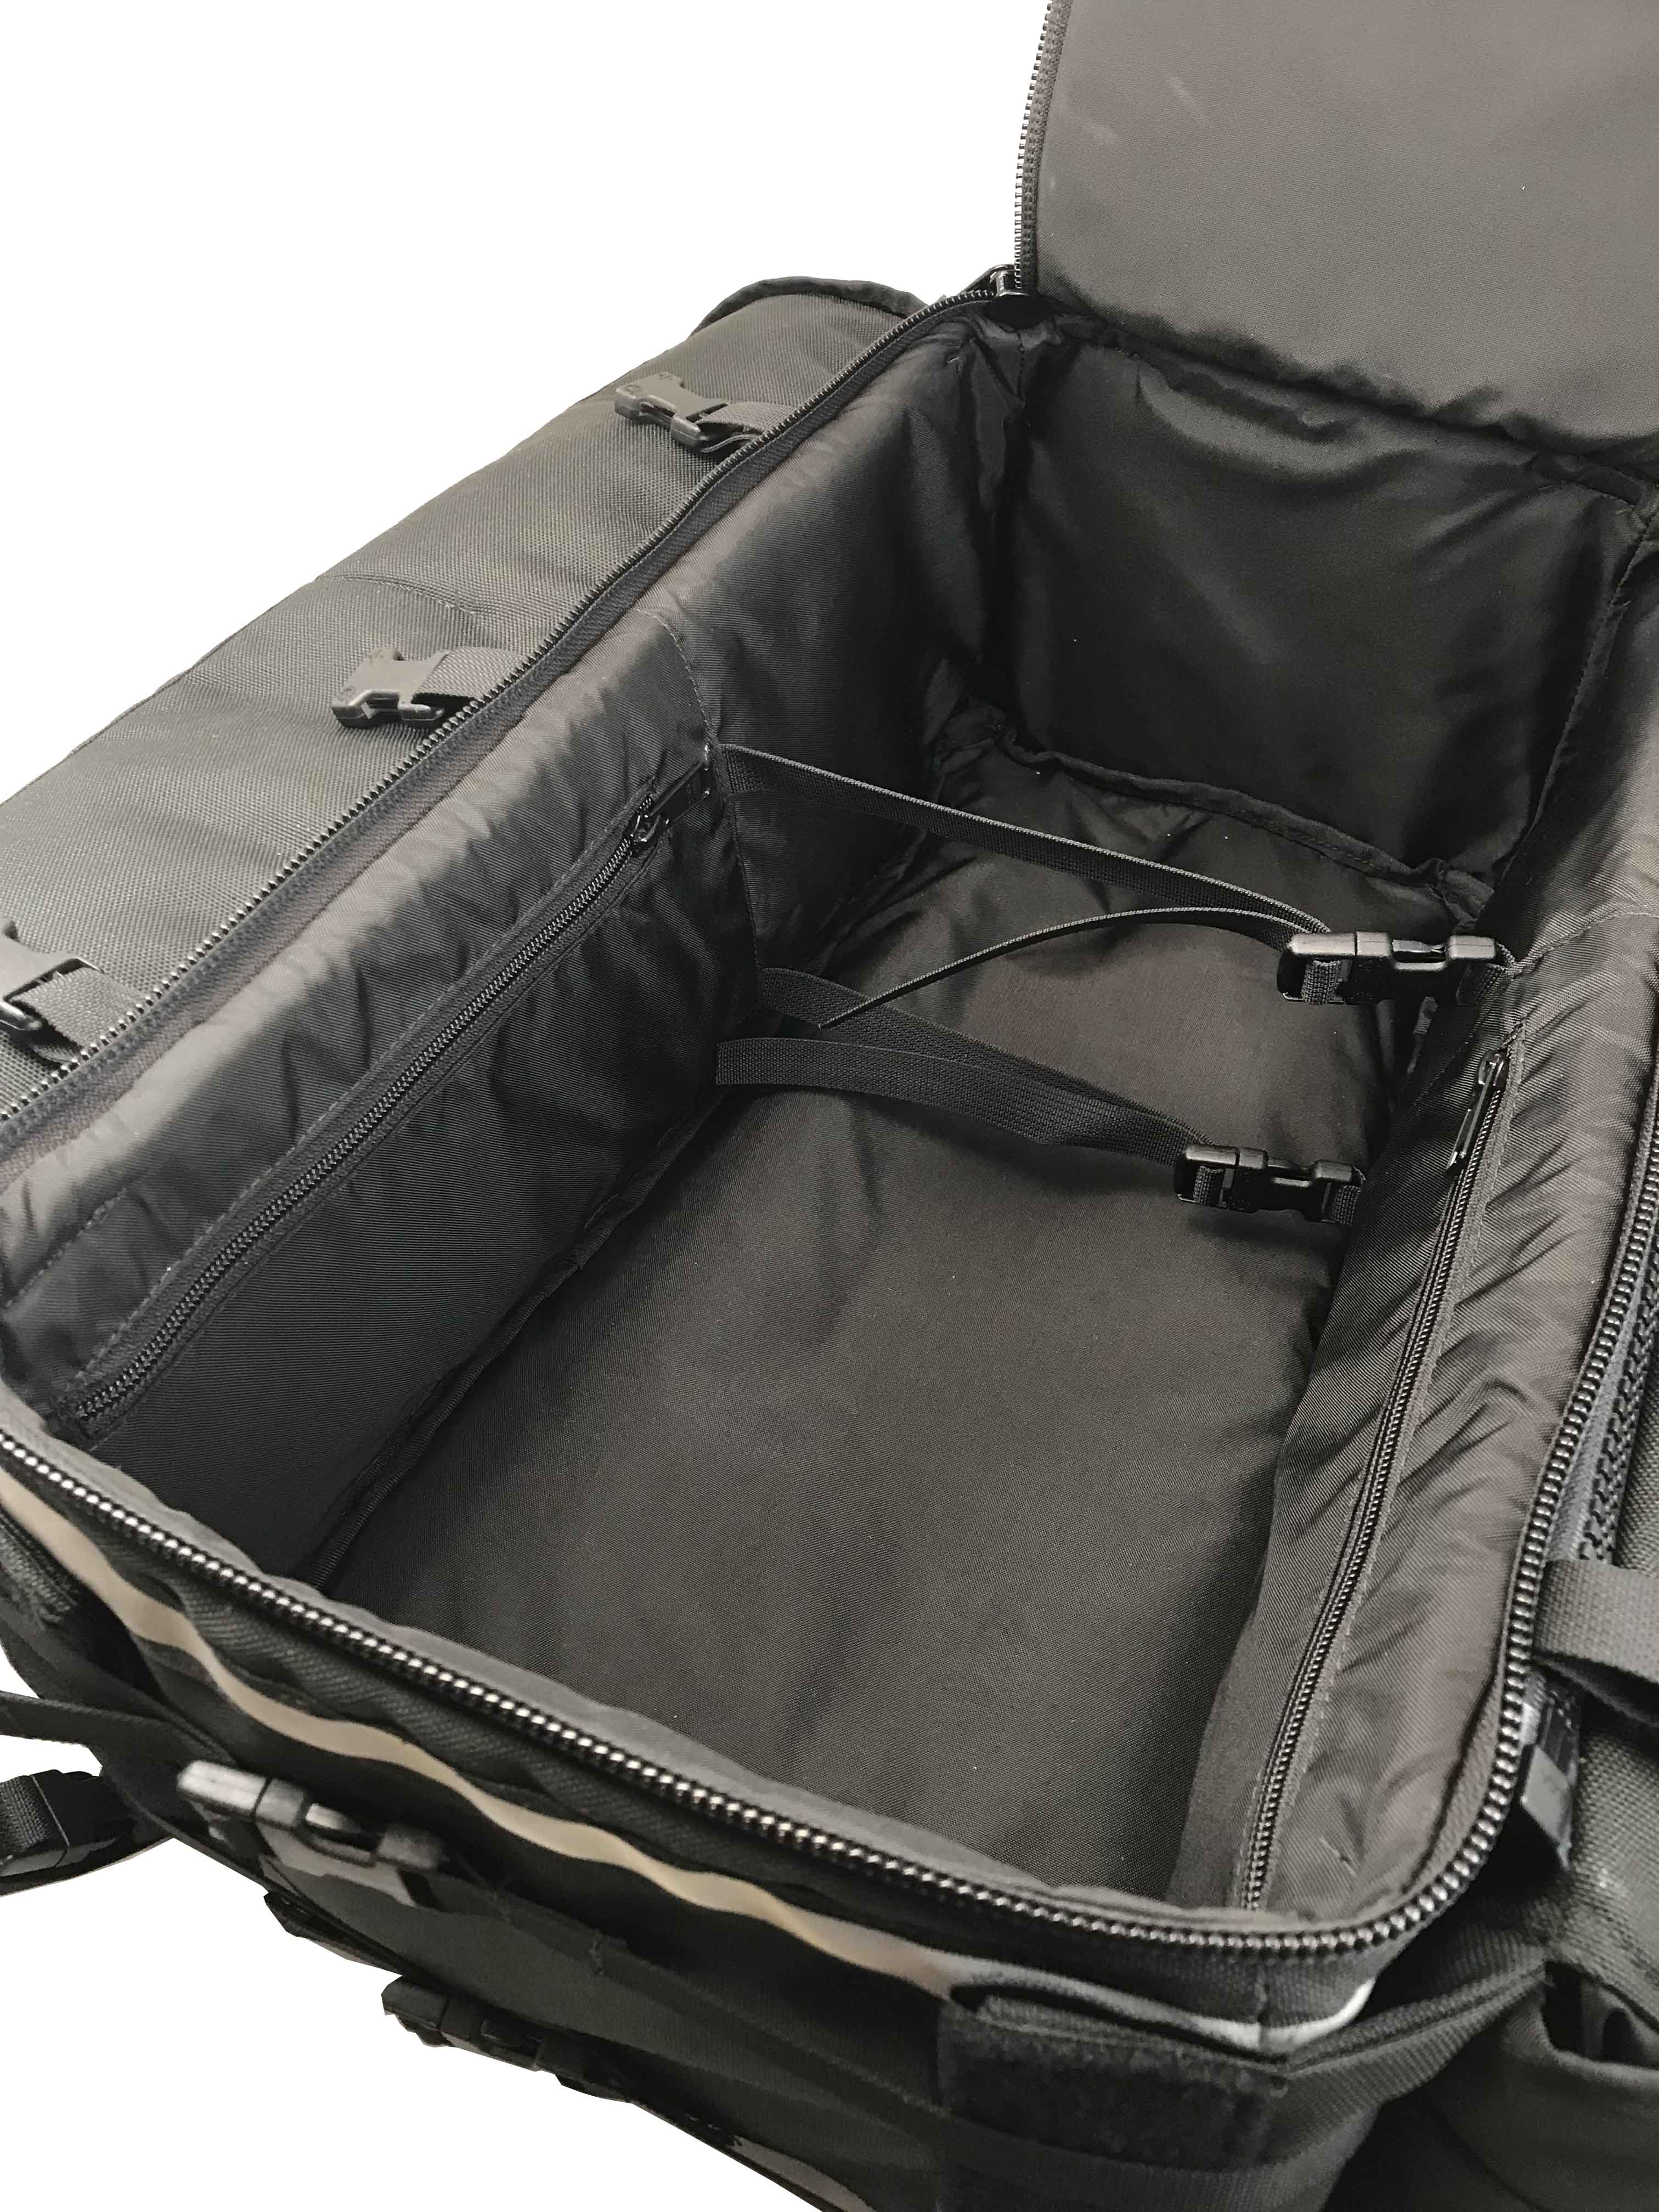 Dual Sport Top Bag - Convertible